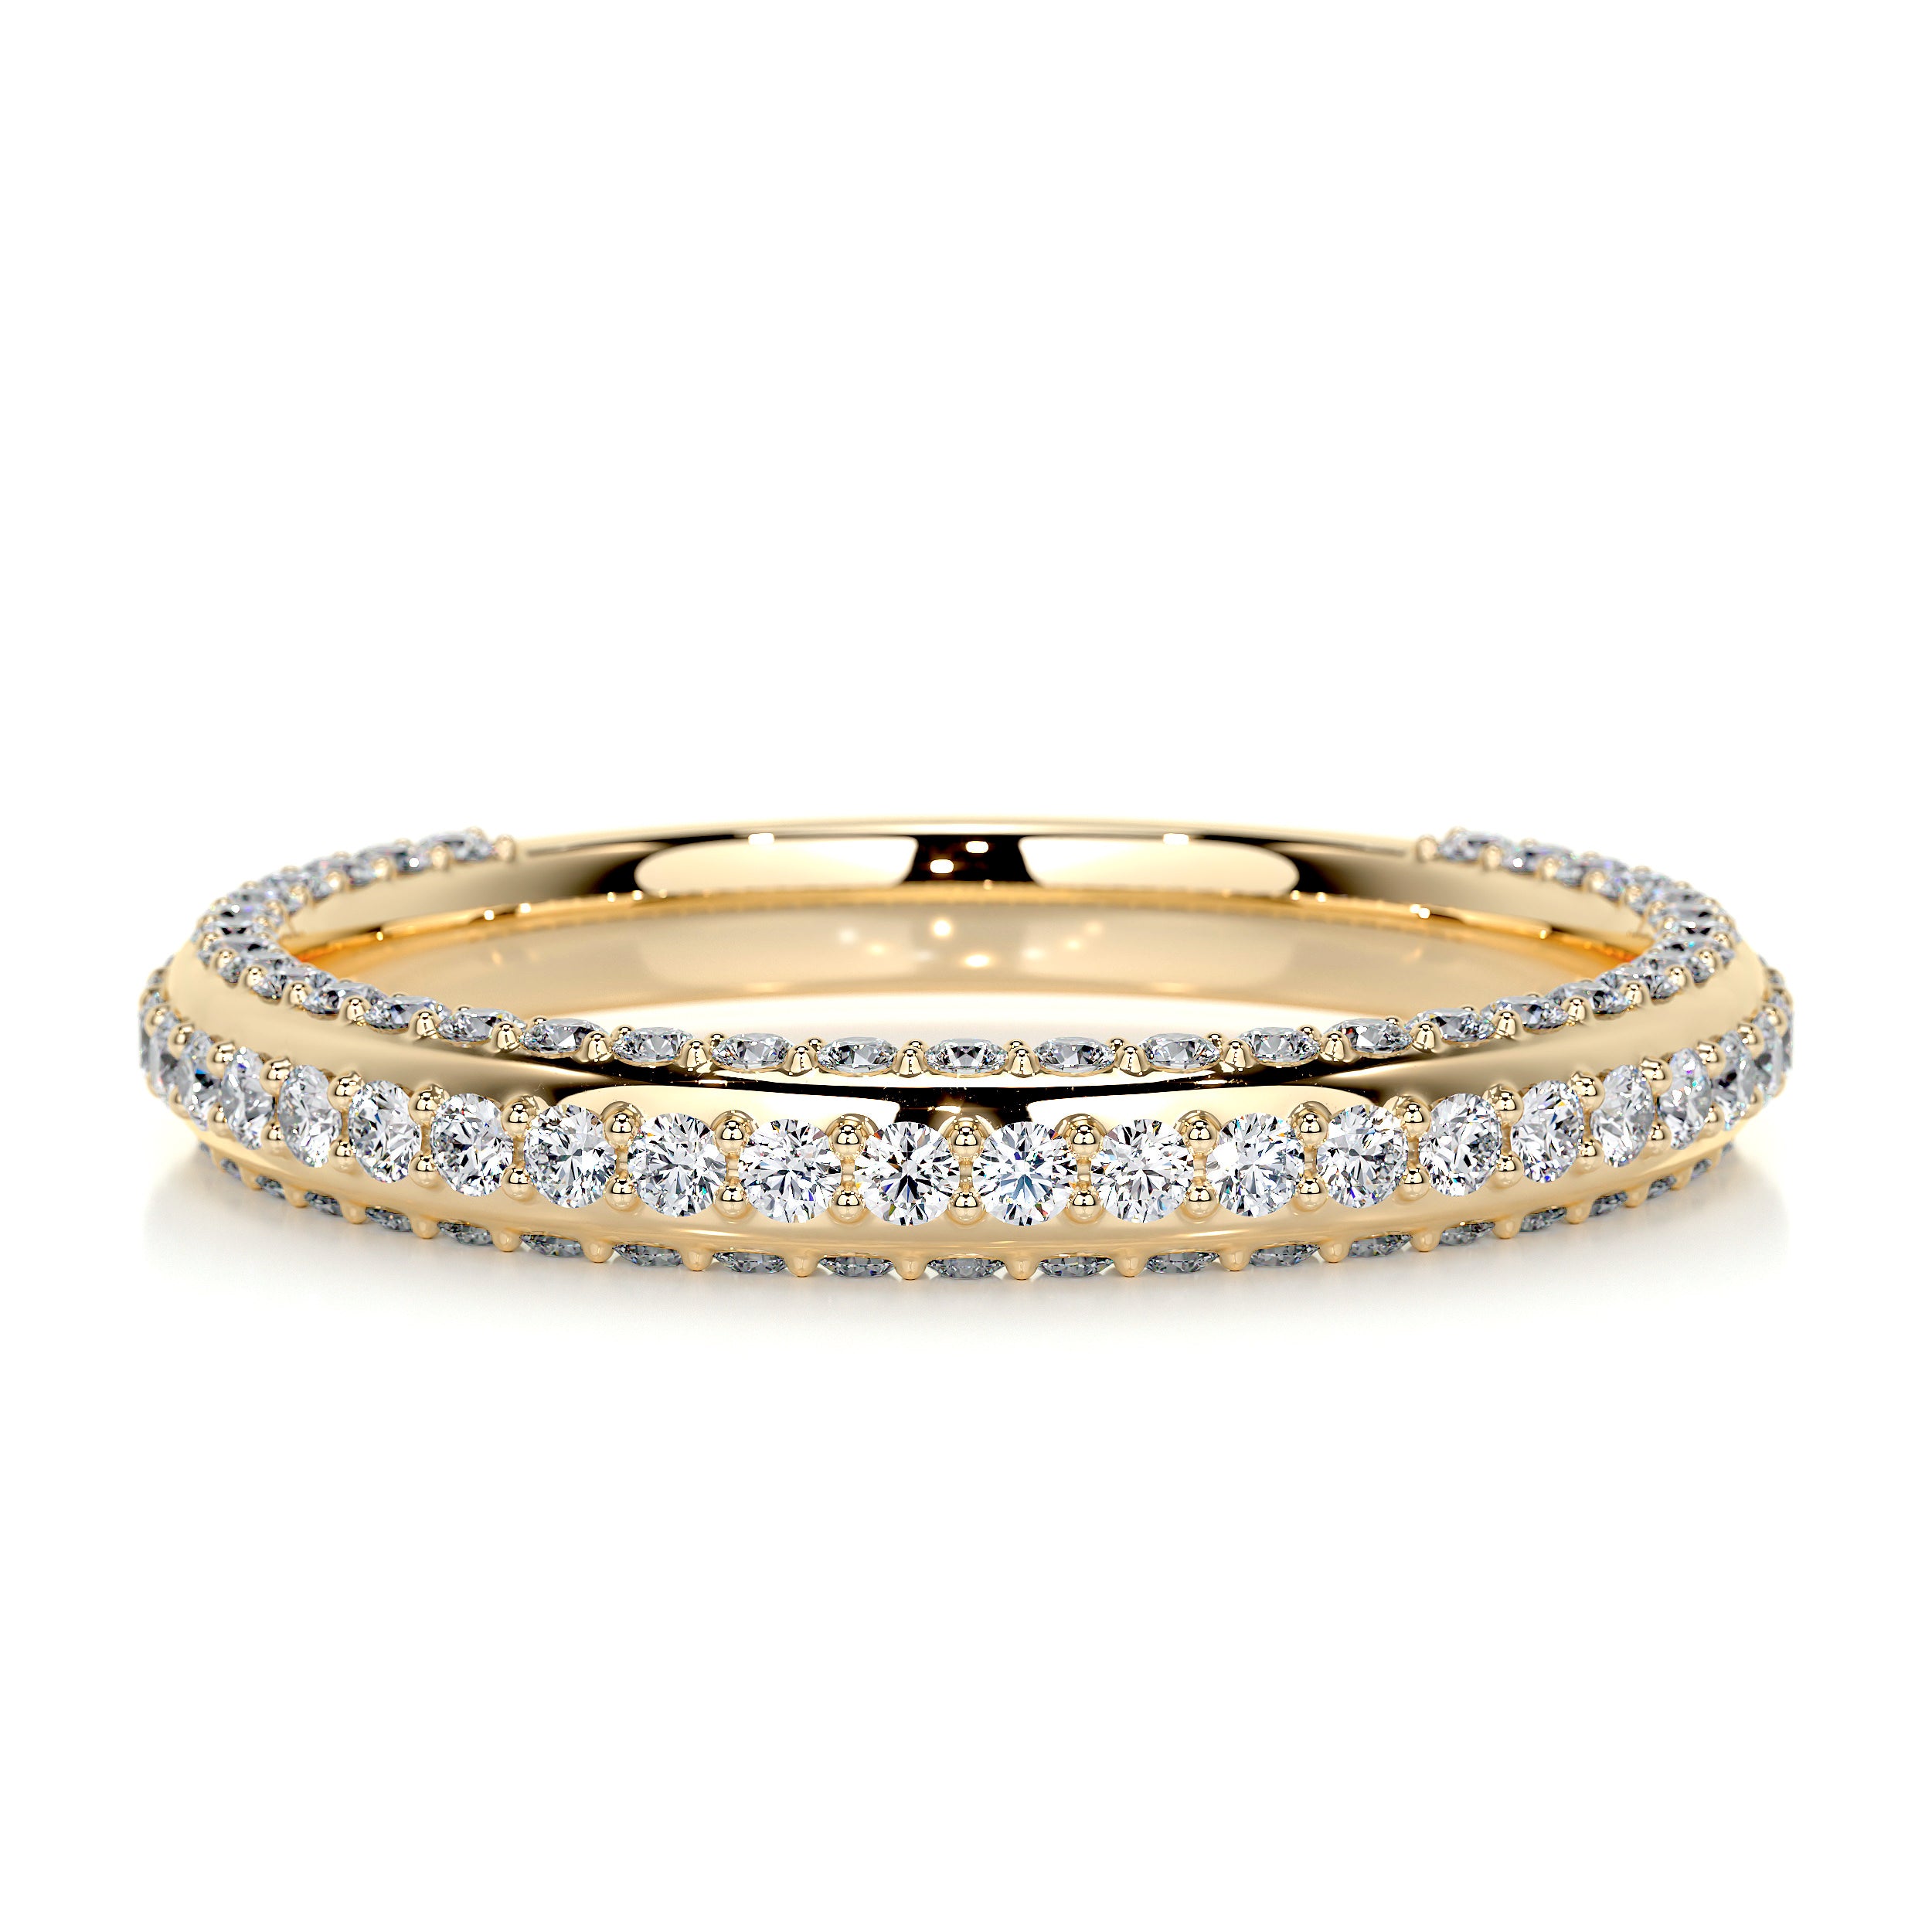 Anastasia Diamond Wedding Ring   (0.75 Carat) -18K Yellow Gold